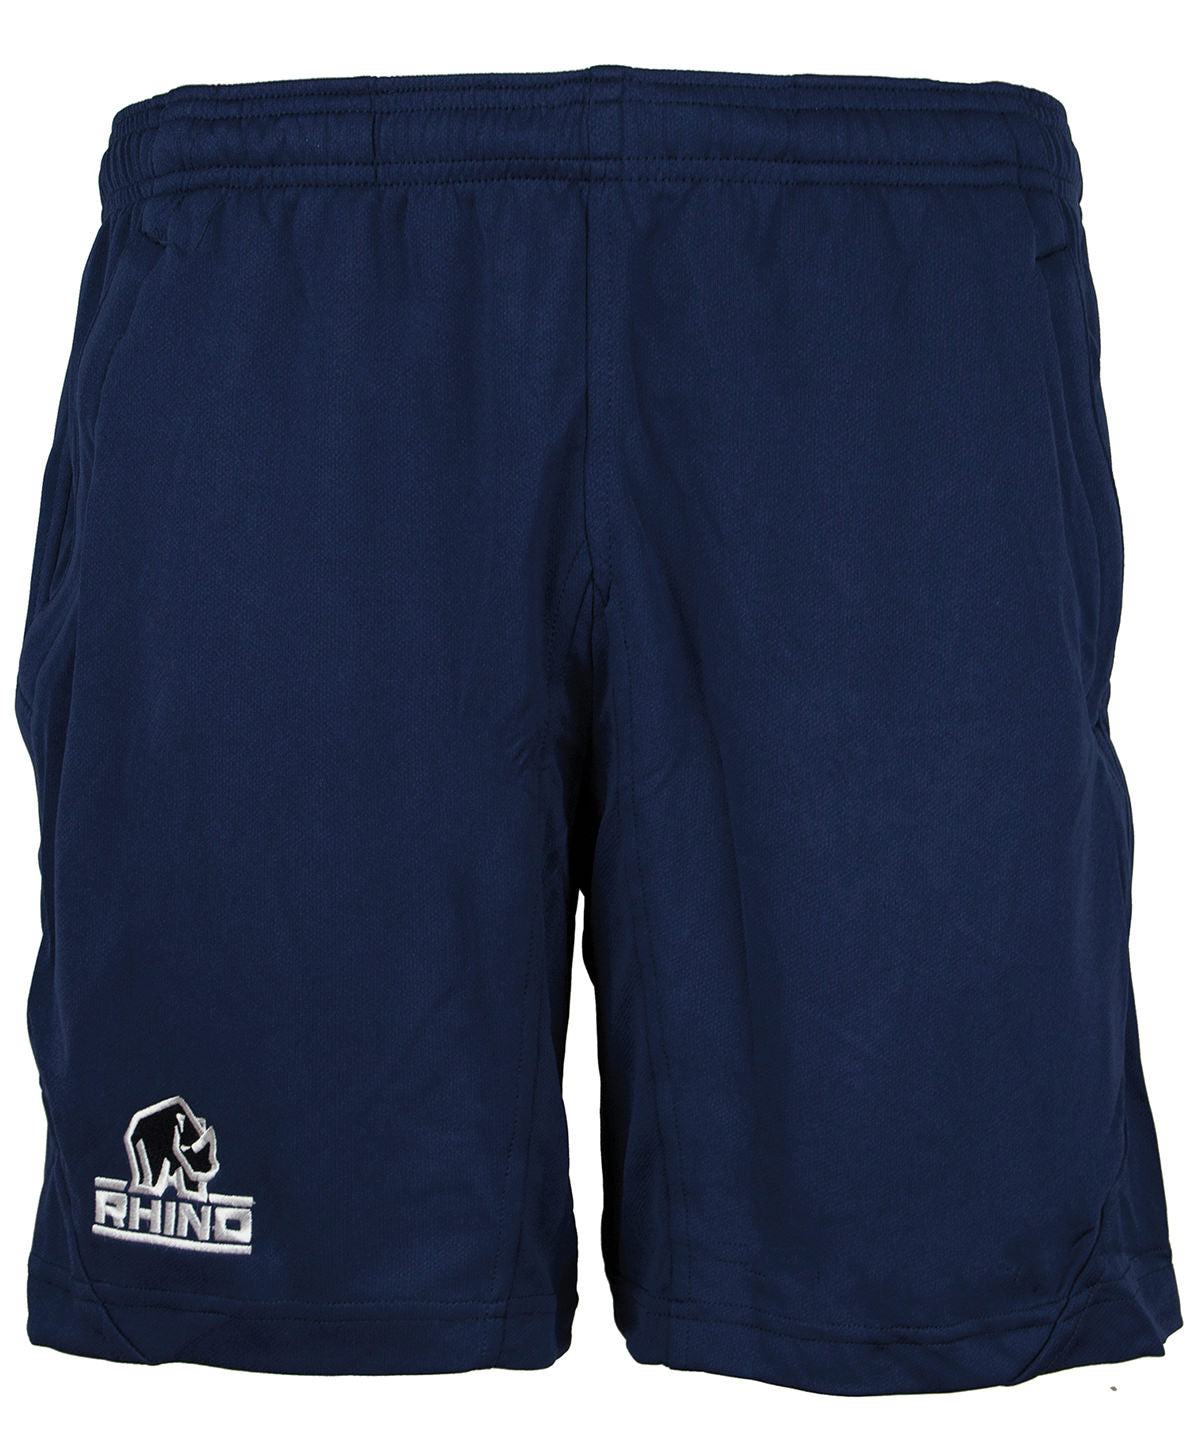 Stuttbuxur - Challenger Shorts